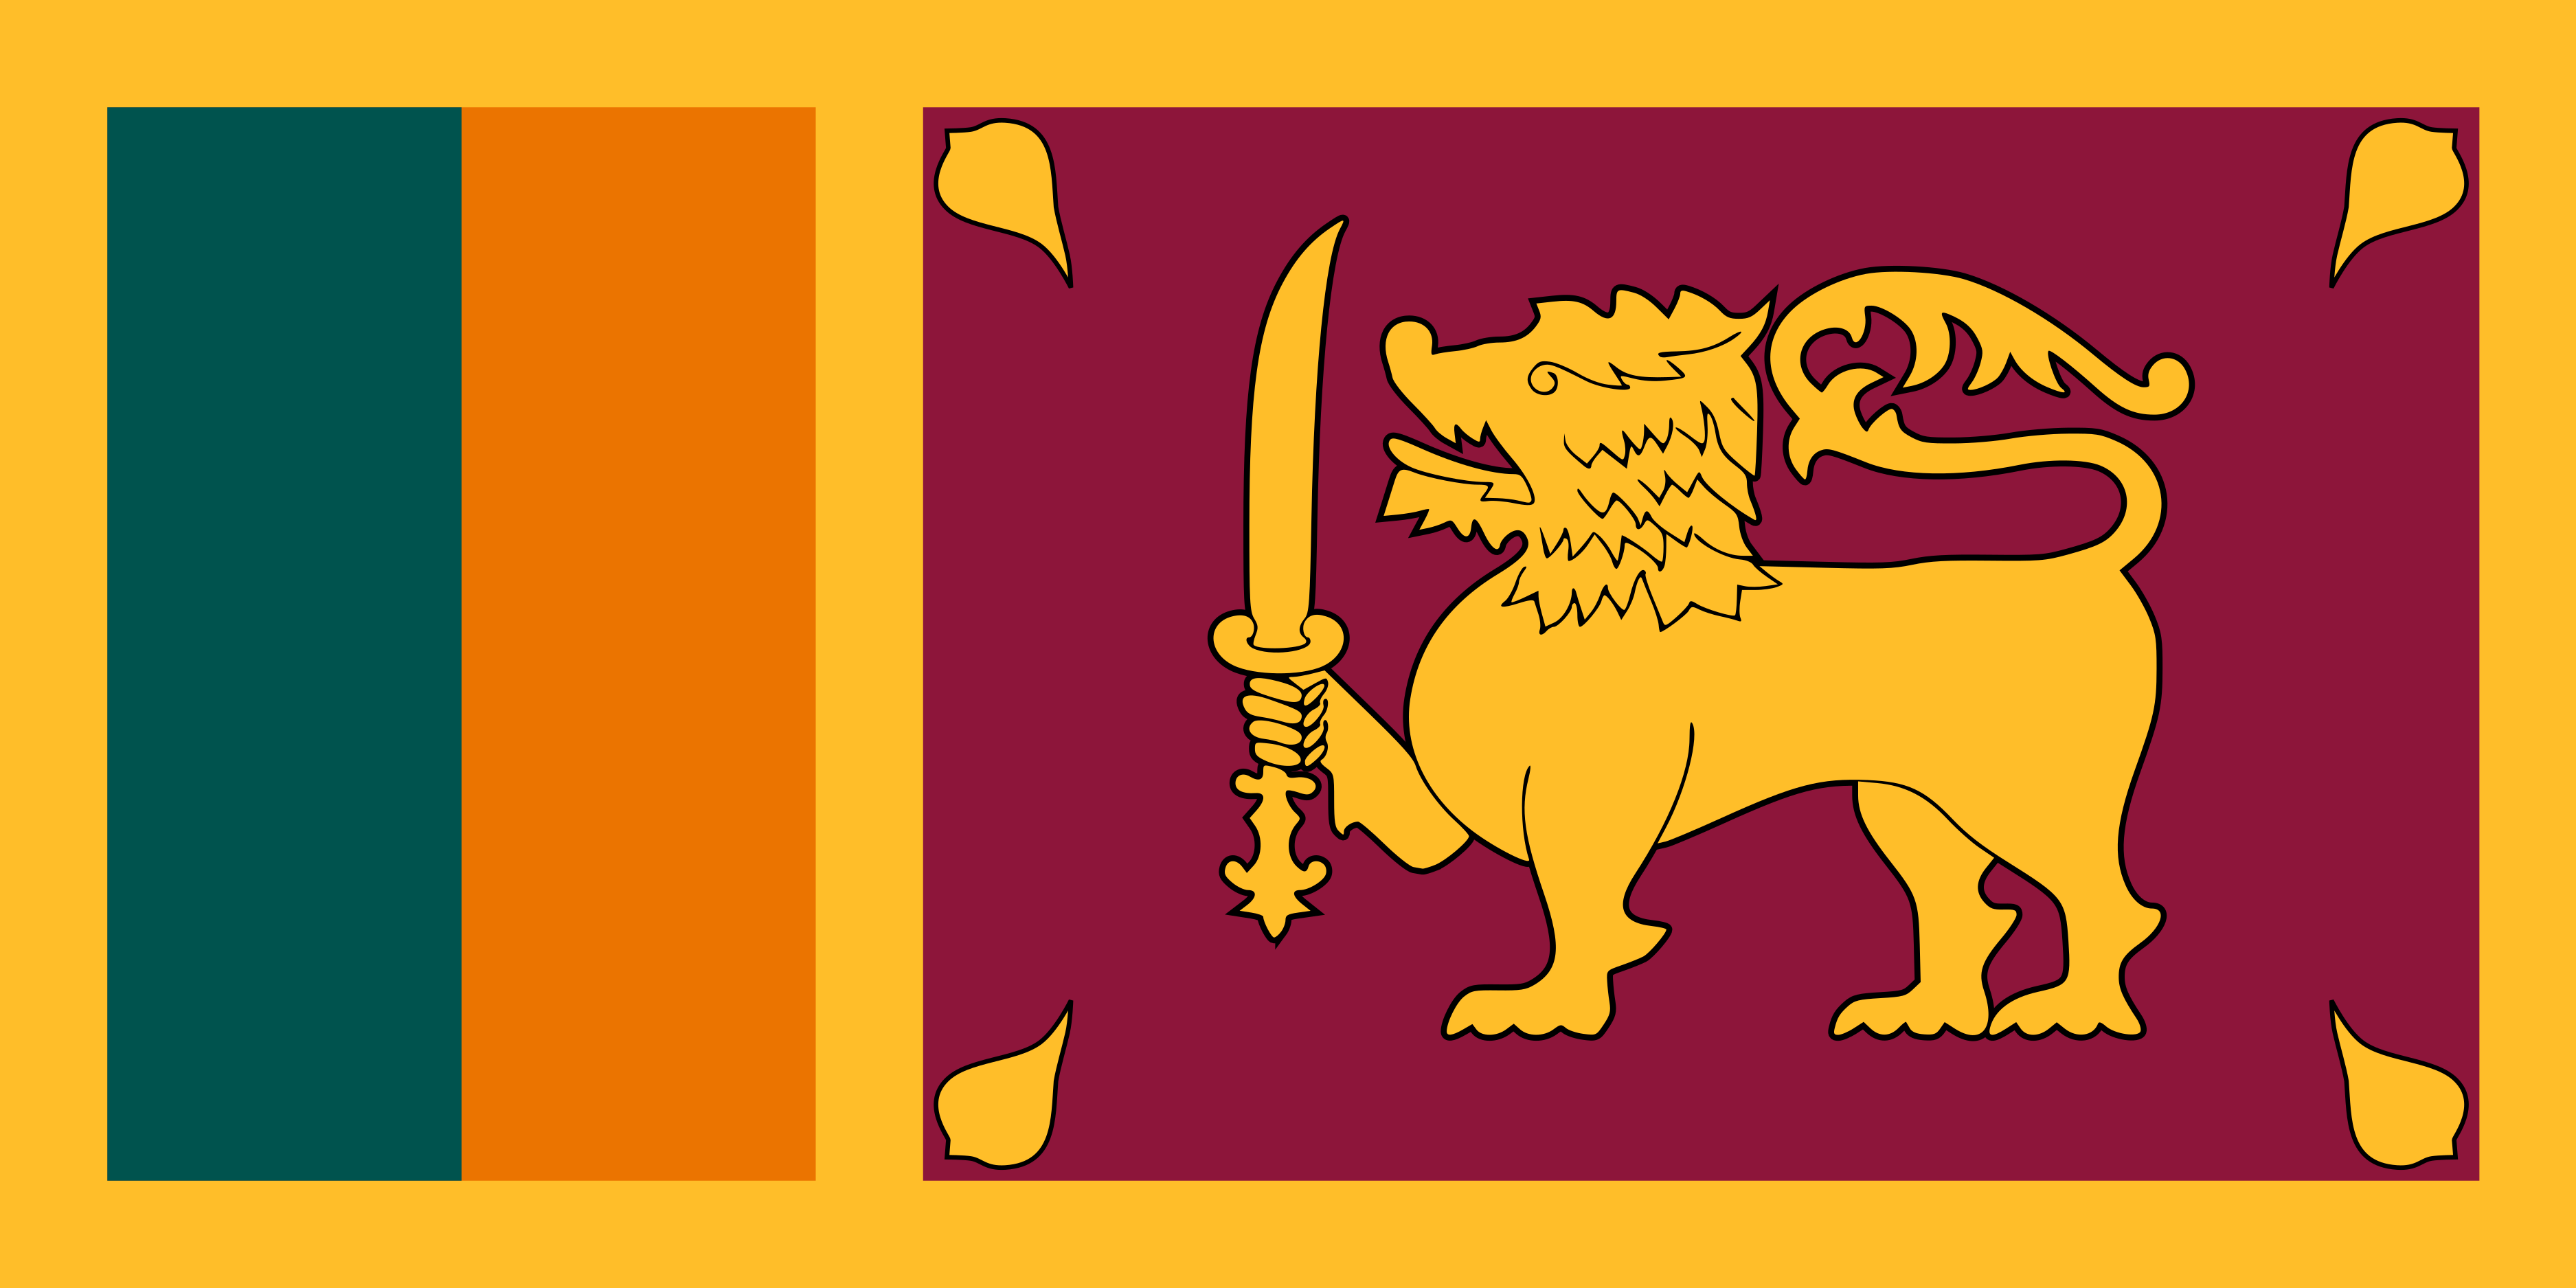 Free Sri Lanka Flag Documents: PDF, DOC, DOCX, HTML & More!